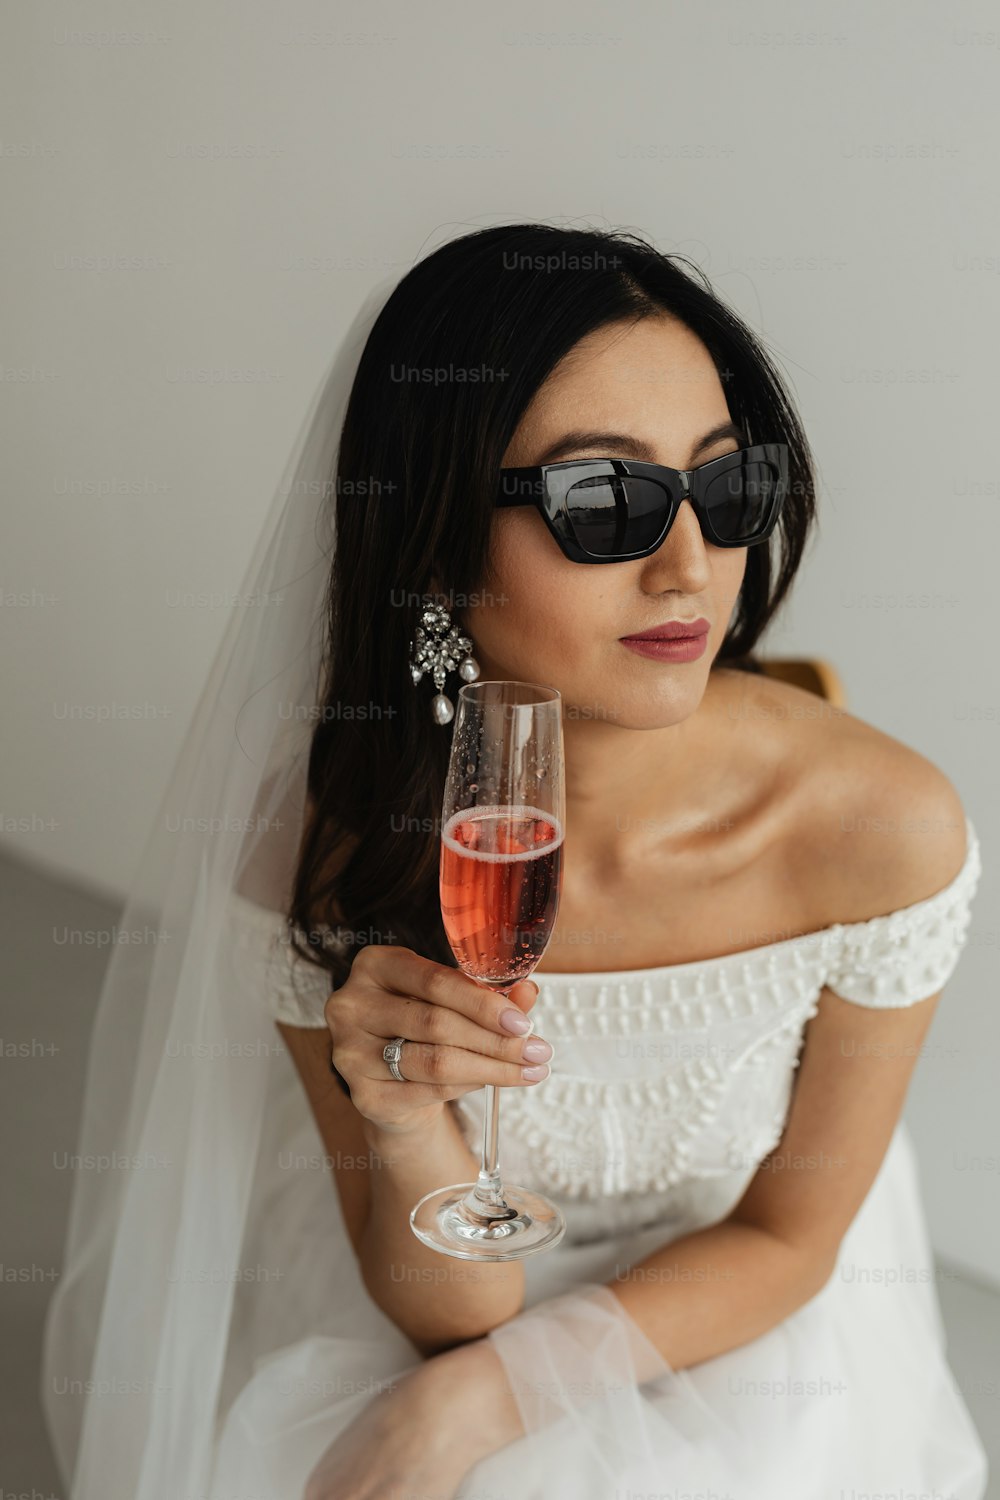 Une femme en robe de mariée tenant un verre de vin